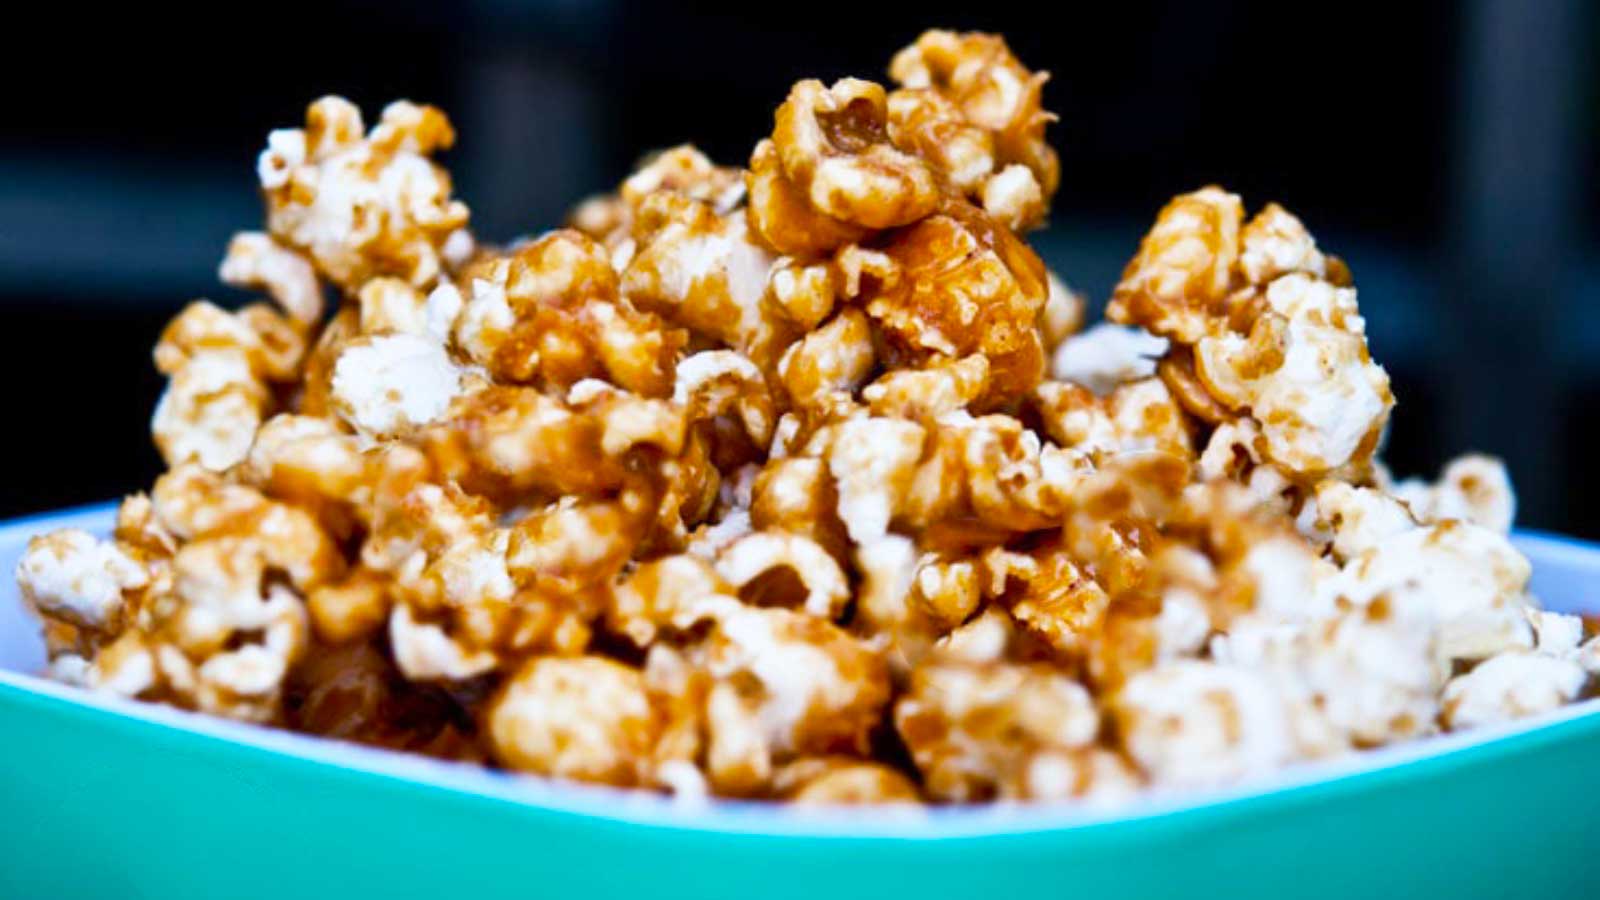 Sticky Caramel Popcorn in an aqua-colored bowl.